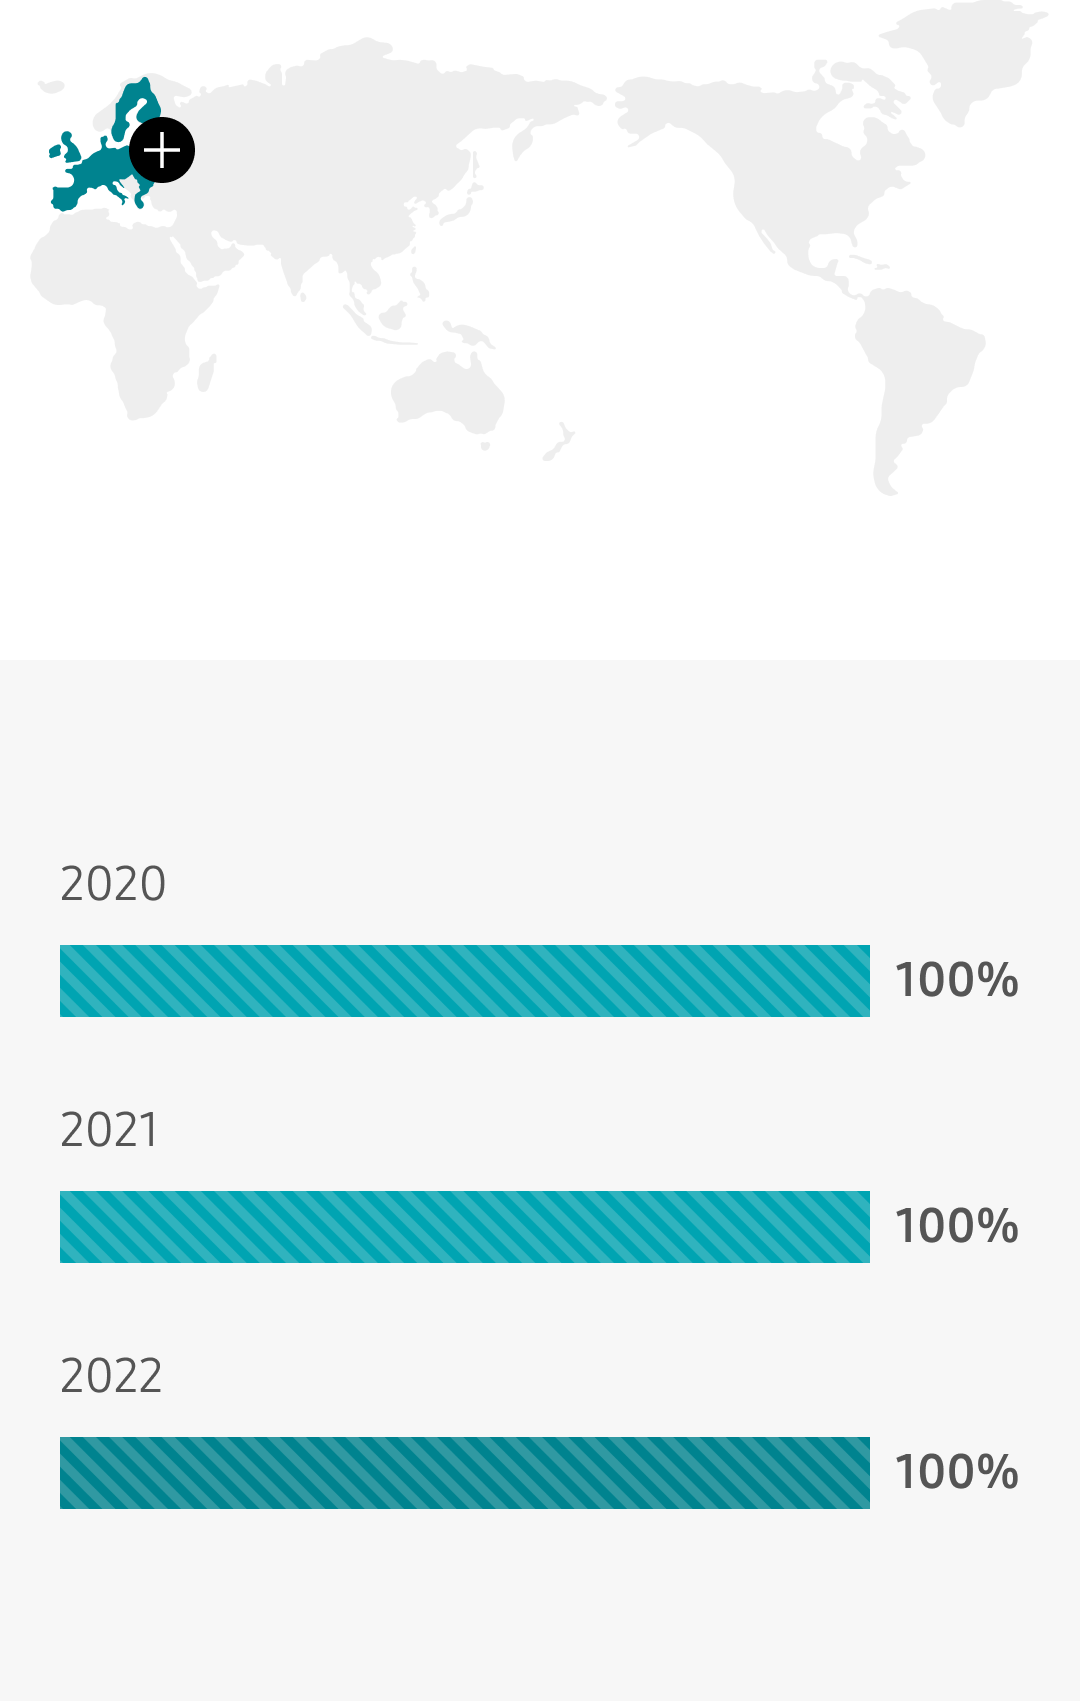 Europe 2021 100%, 2022 100%, 2023 100%